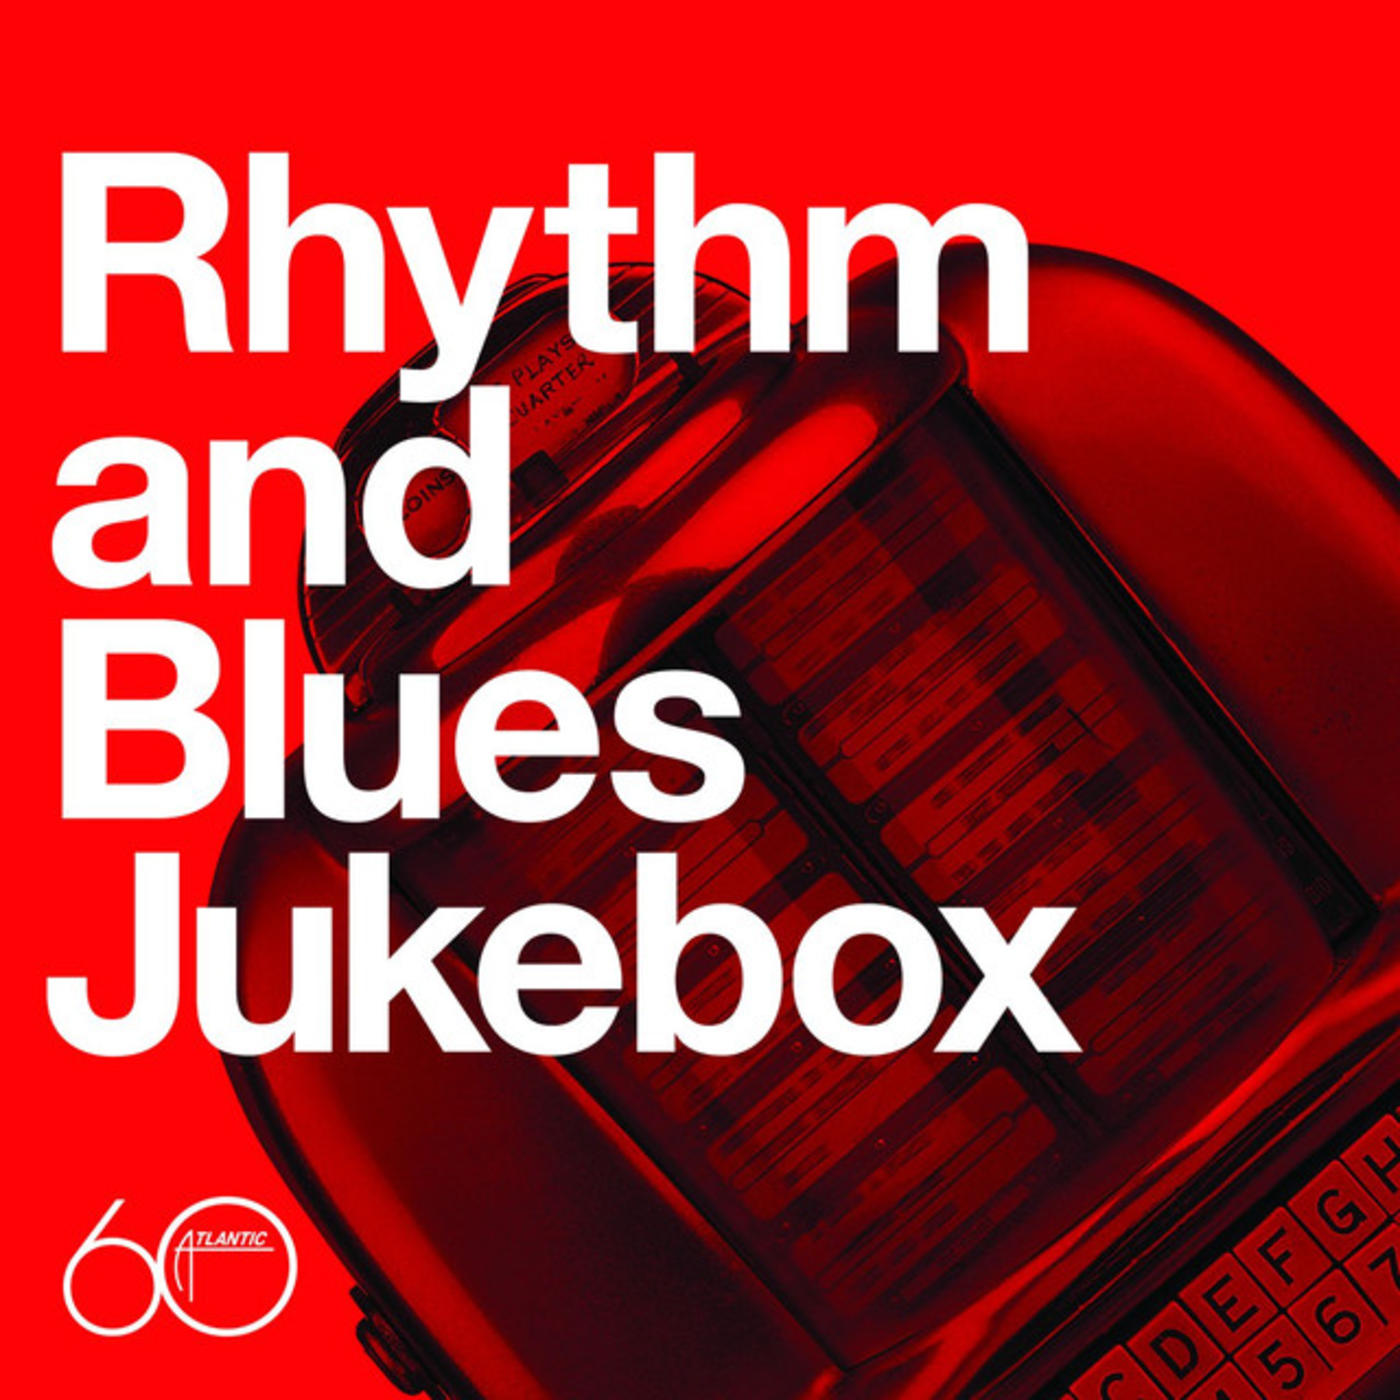 Atlantic 60th: Rhythm And Blues Jukebox